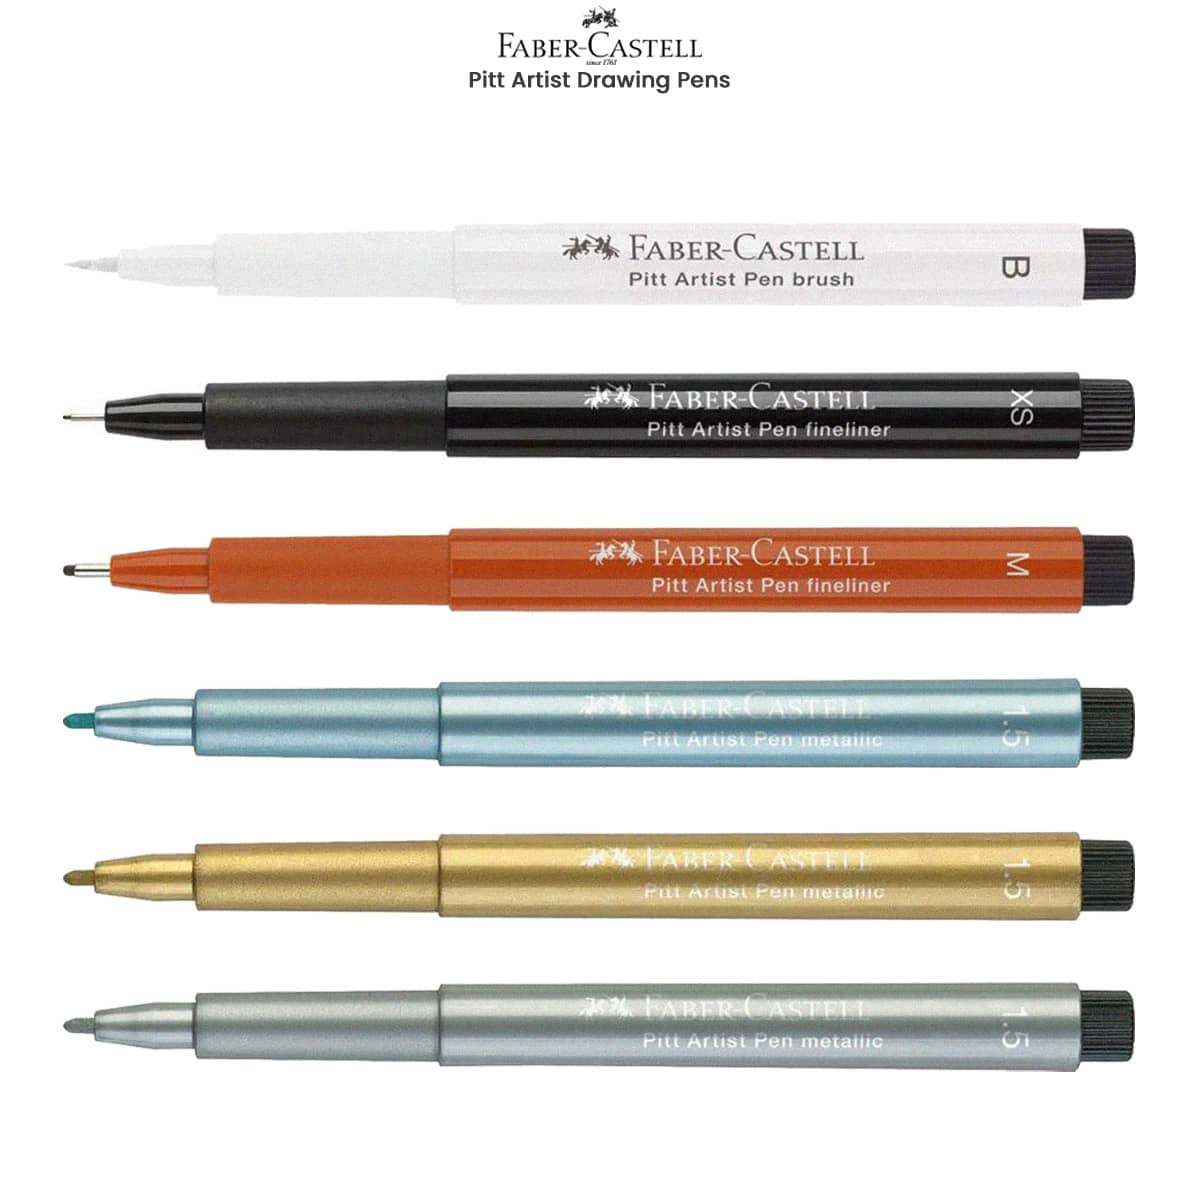 https://www.jerrysartarama.com/media/catalog/product/f/a/faber-castell-pitt-artist-drawing-pens-main.jpg